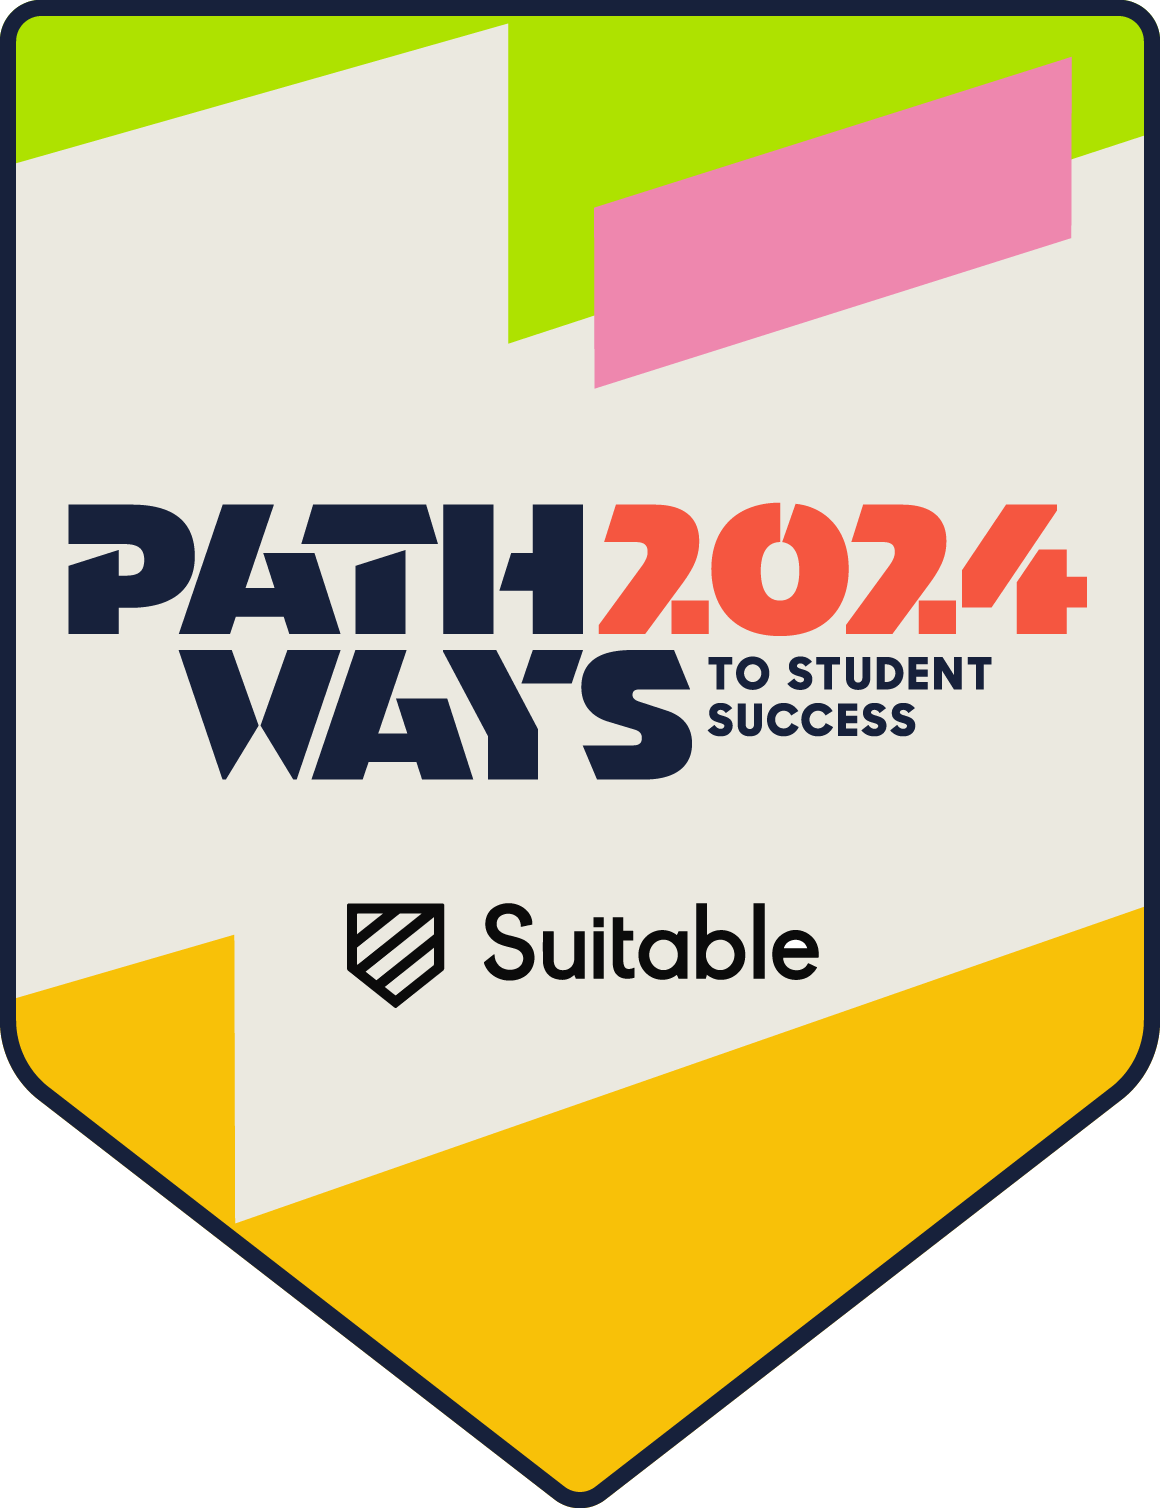 PathwaysBadge - Distinguished Program - Best in Class@4x